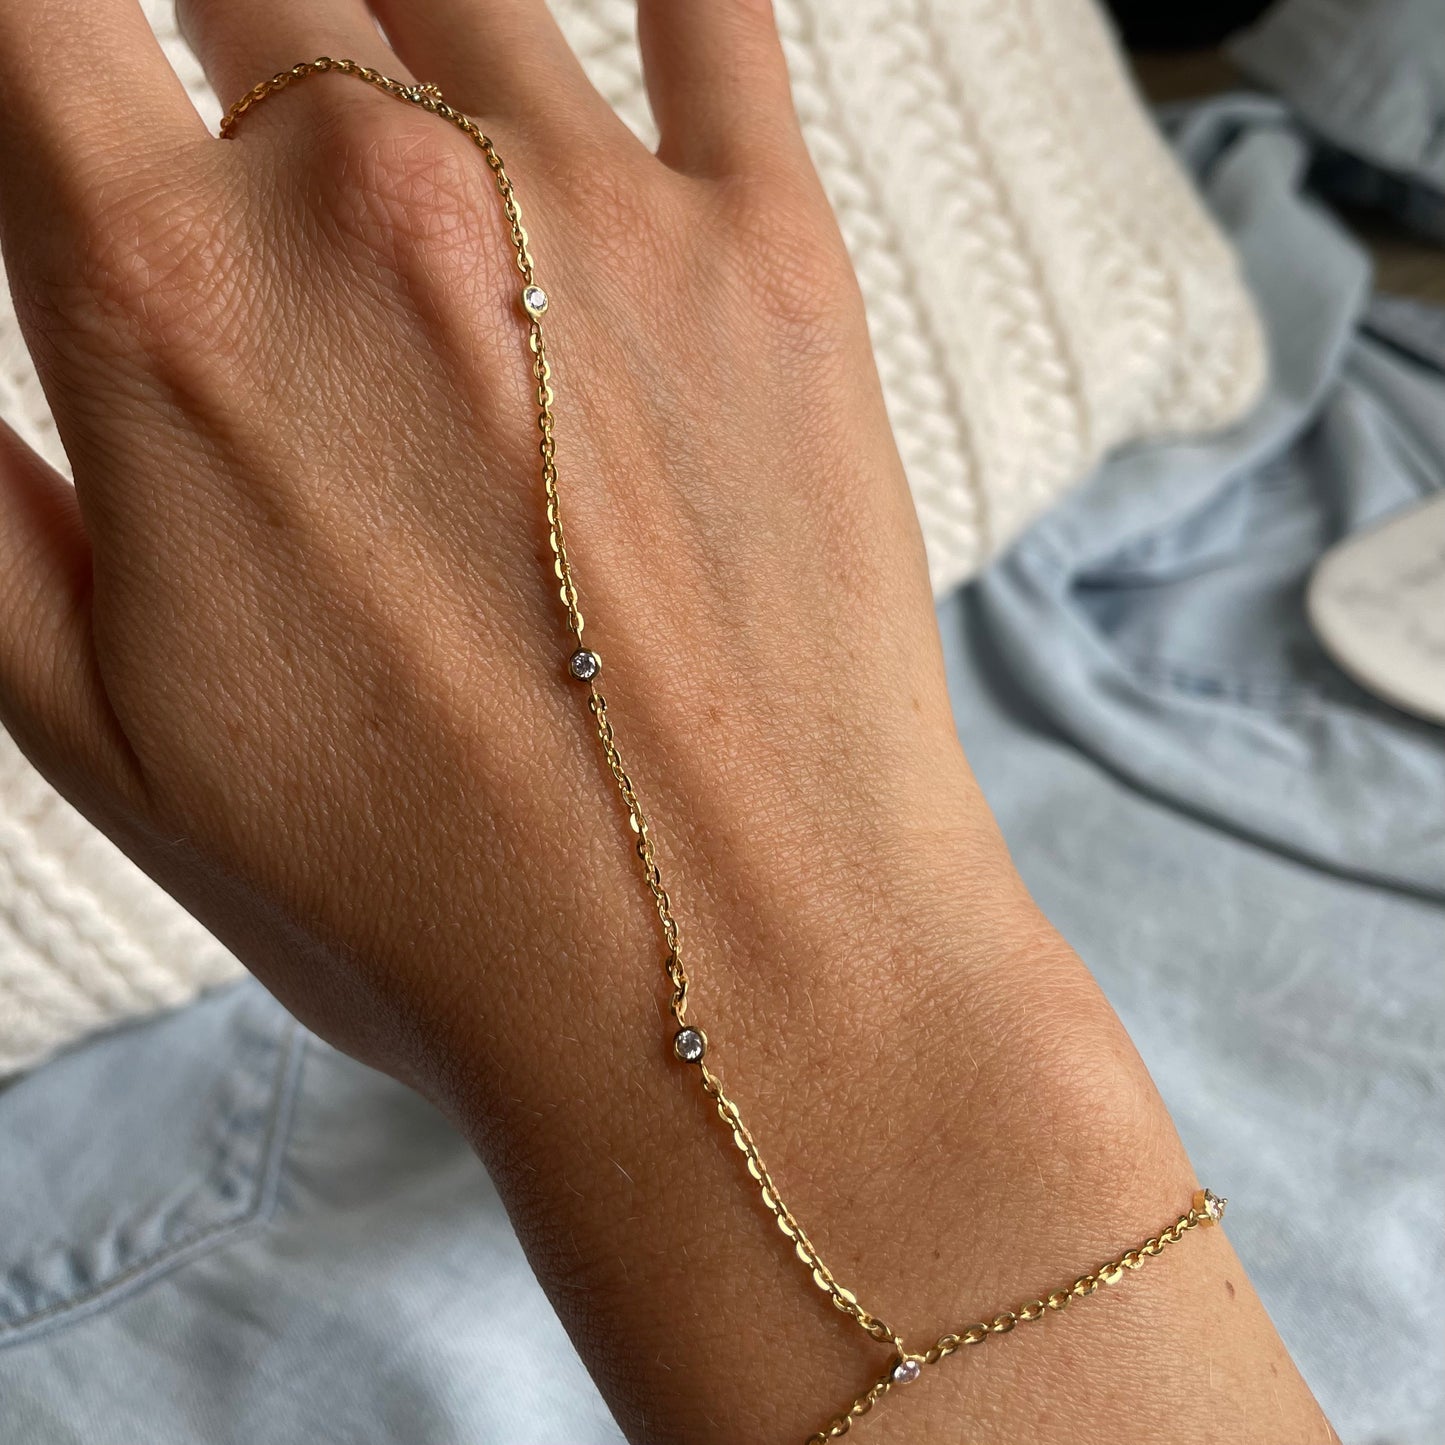 Six bezel-set diamonds Hand chain/Finger Sleeve bracelet - - Jewelry - Goldie Paris Jewelry - Bezel Bracelet Ring